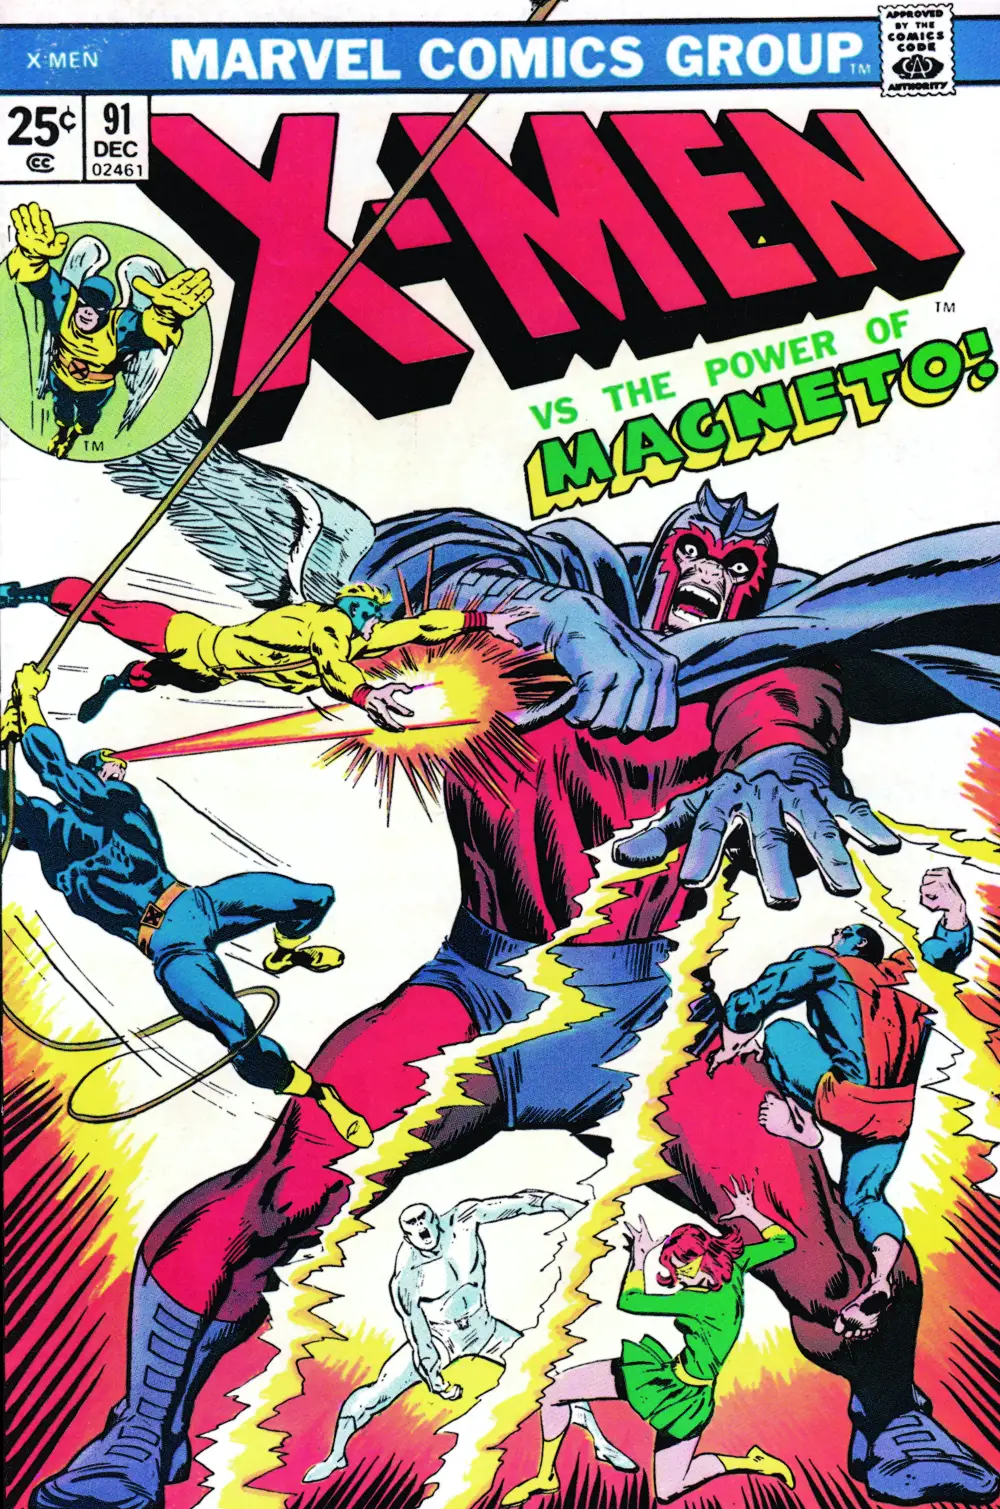 X-Men #91